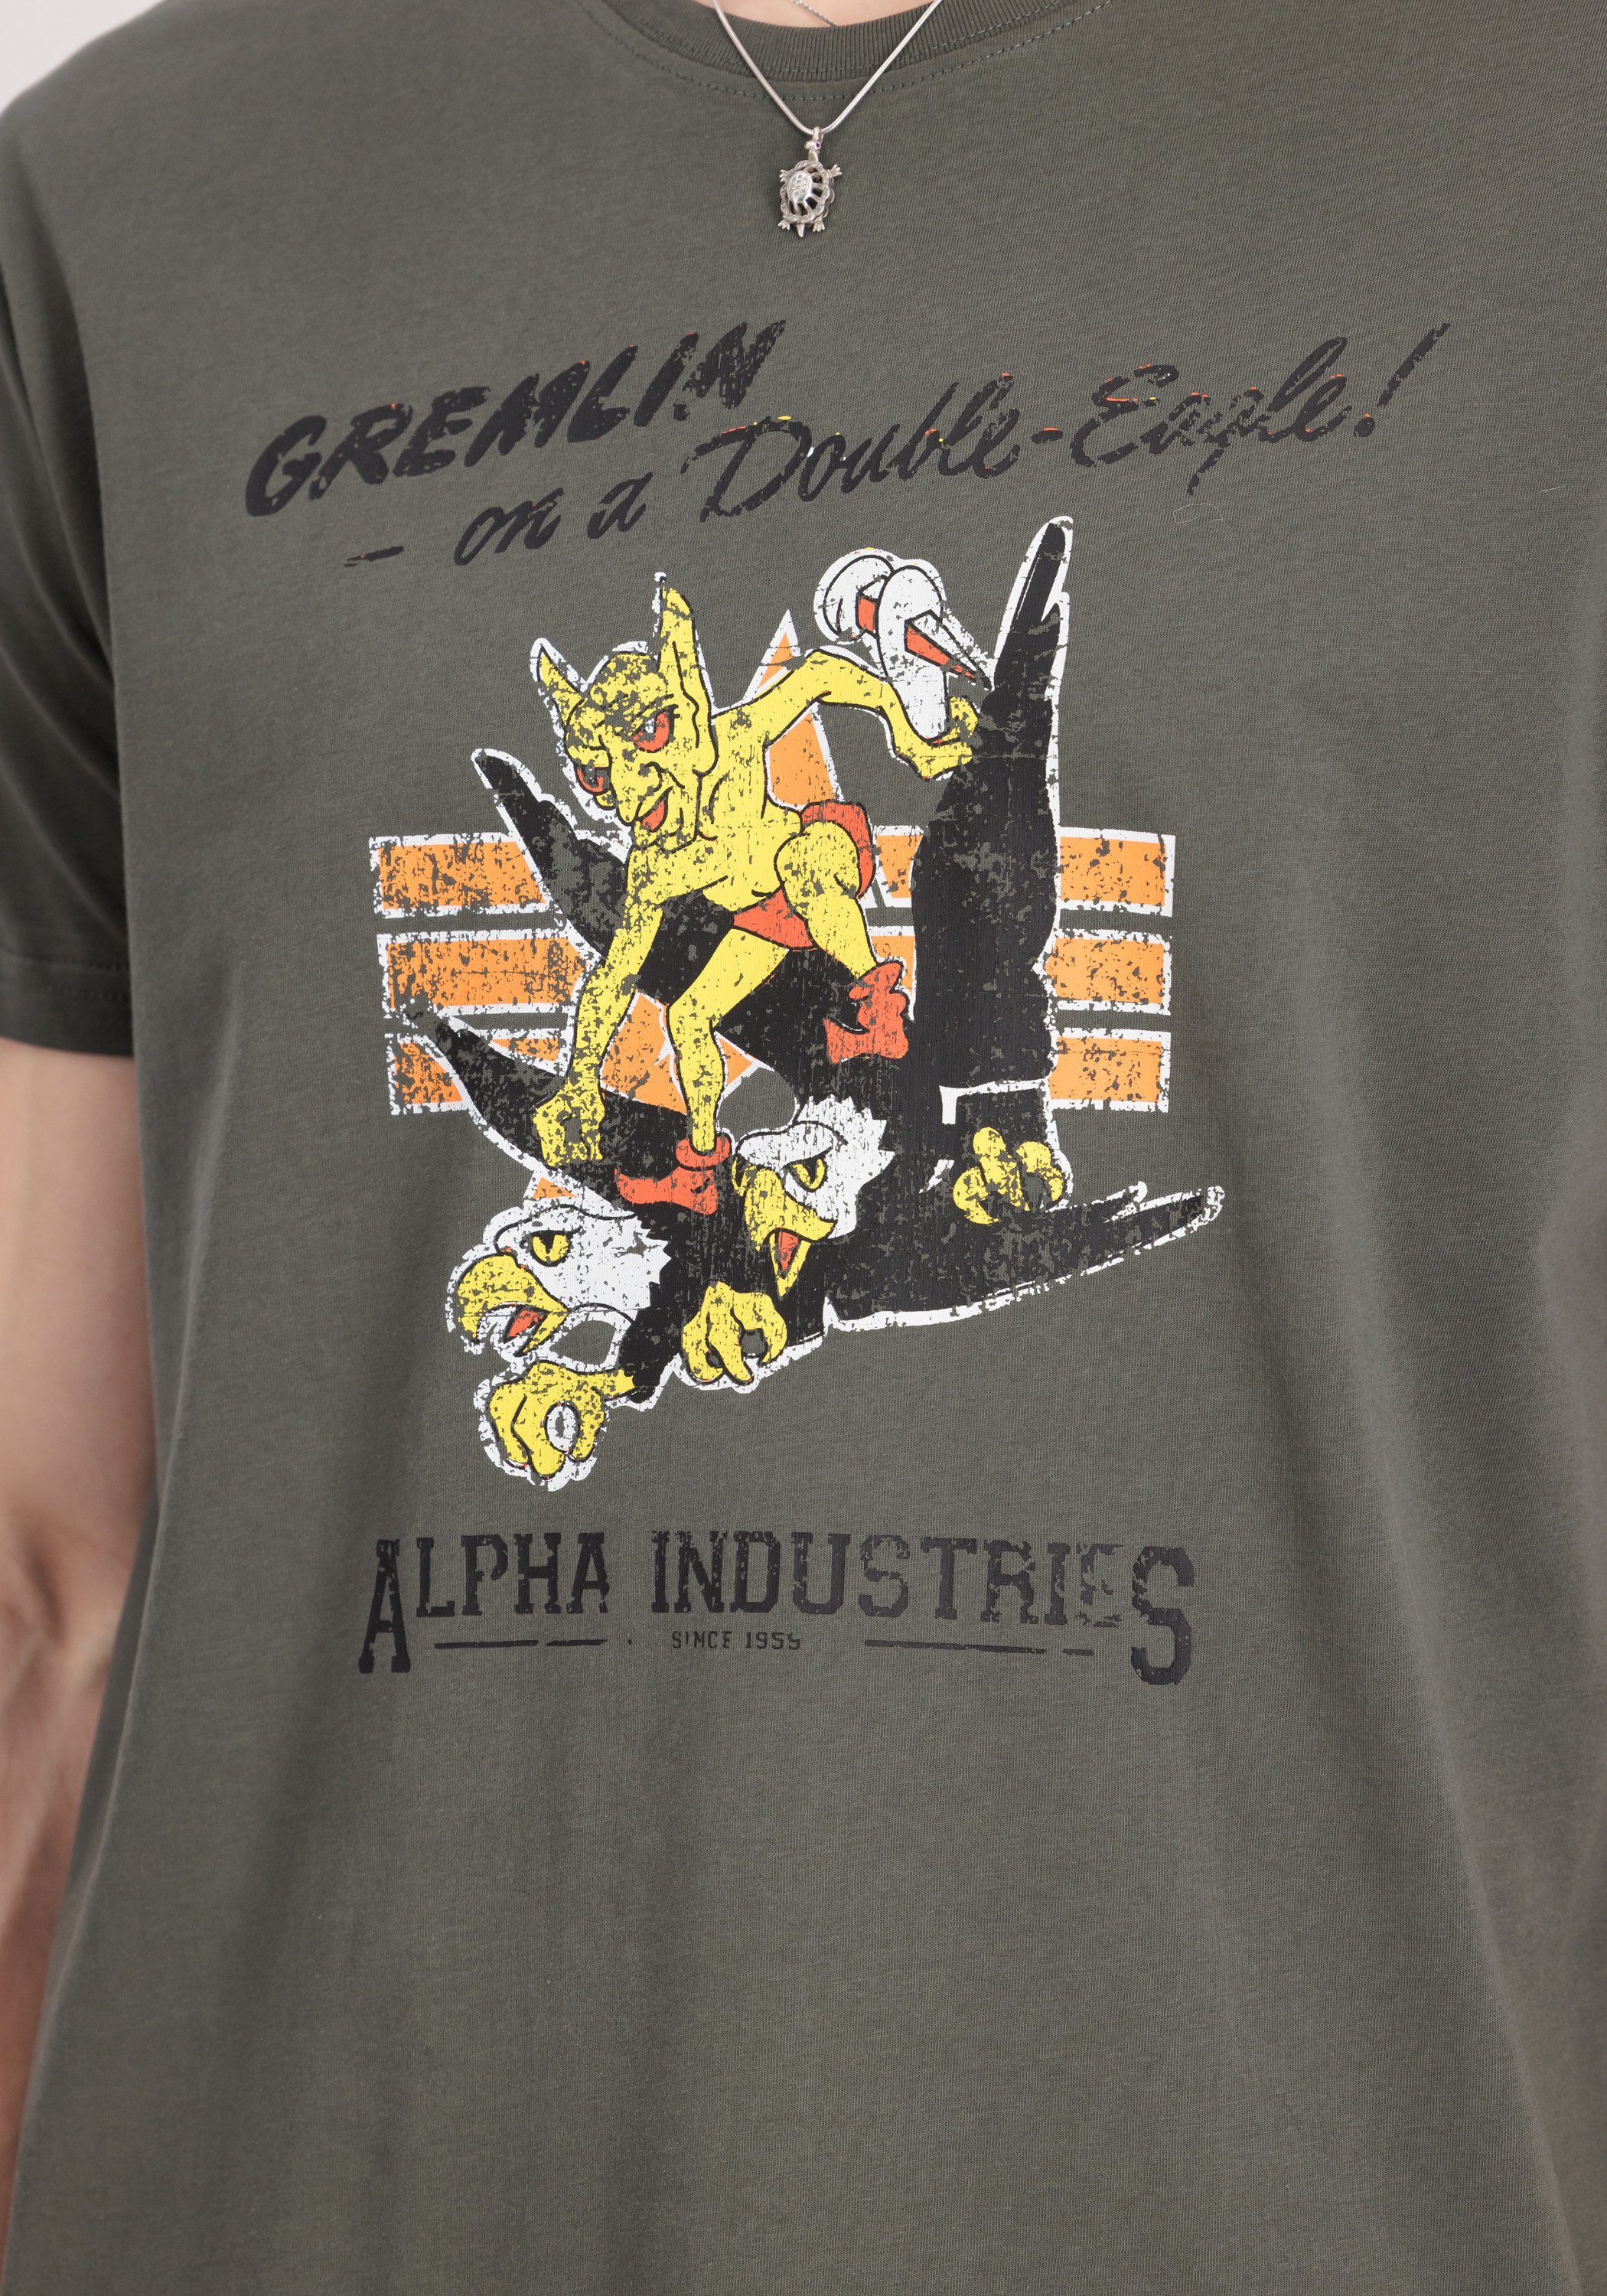 Alpha Industries T-shirt Men T-Shirts Gremlin T